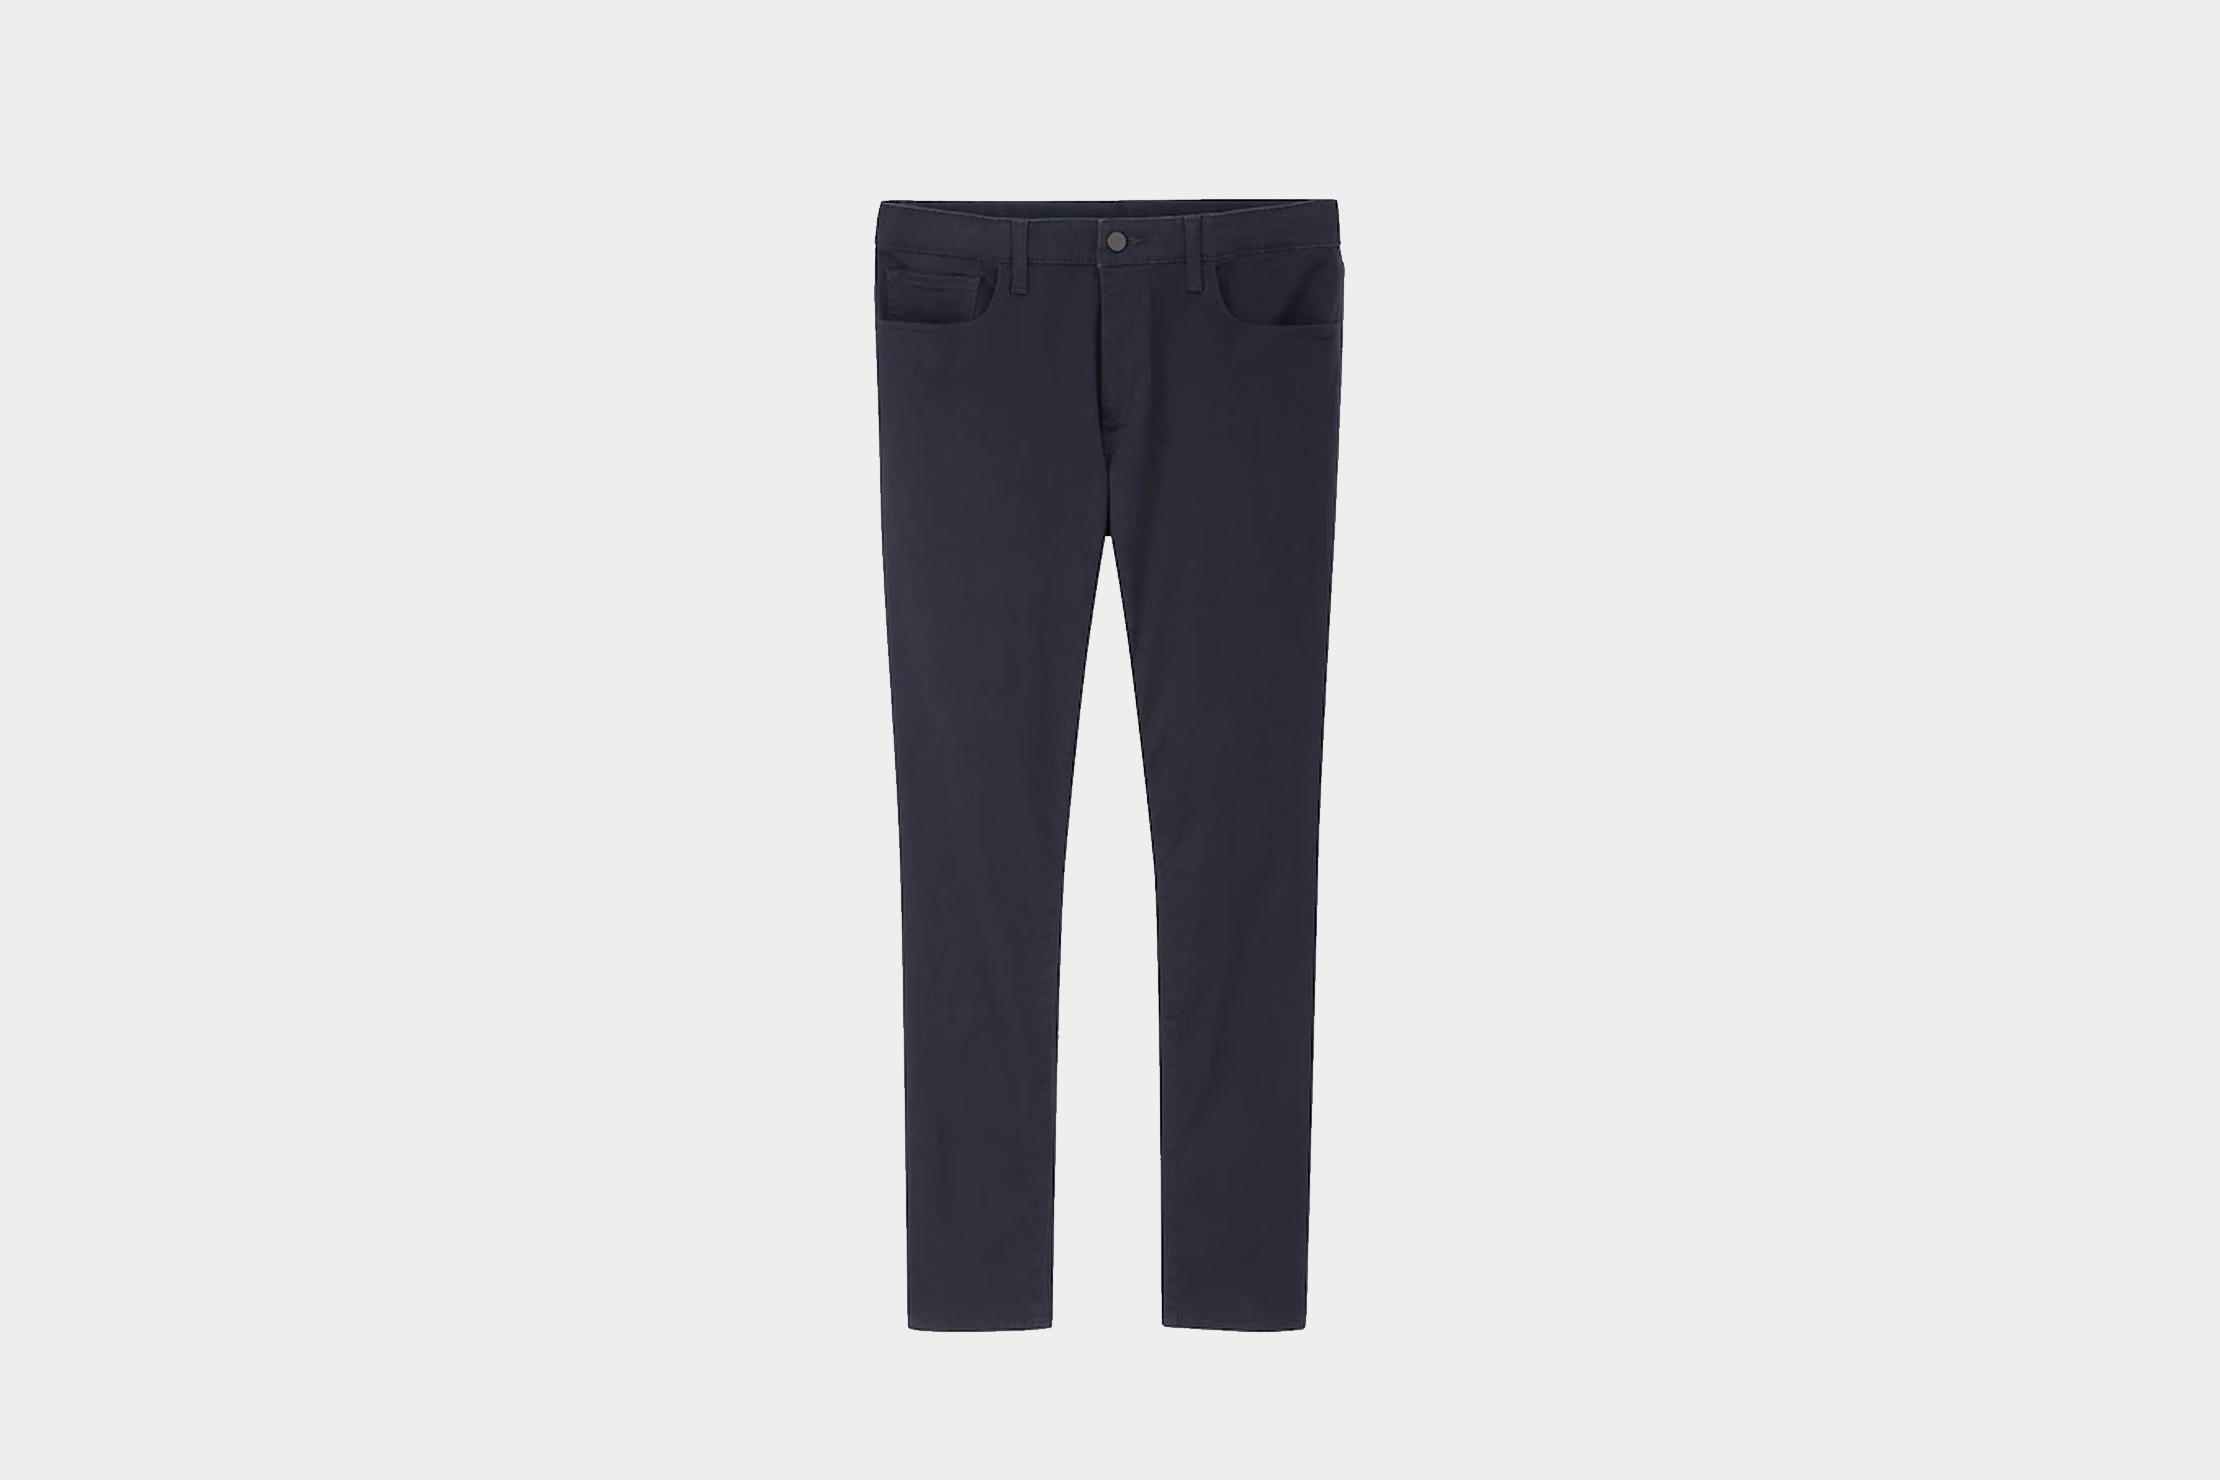 https://cdn.packhacker.com/2022/02/24fb49e9-uniqlo-ultra-stretch-skinny-fit-color-jeans.jpg